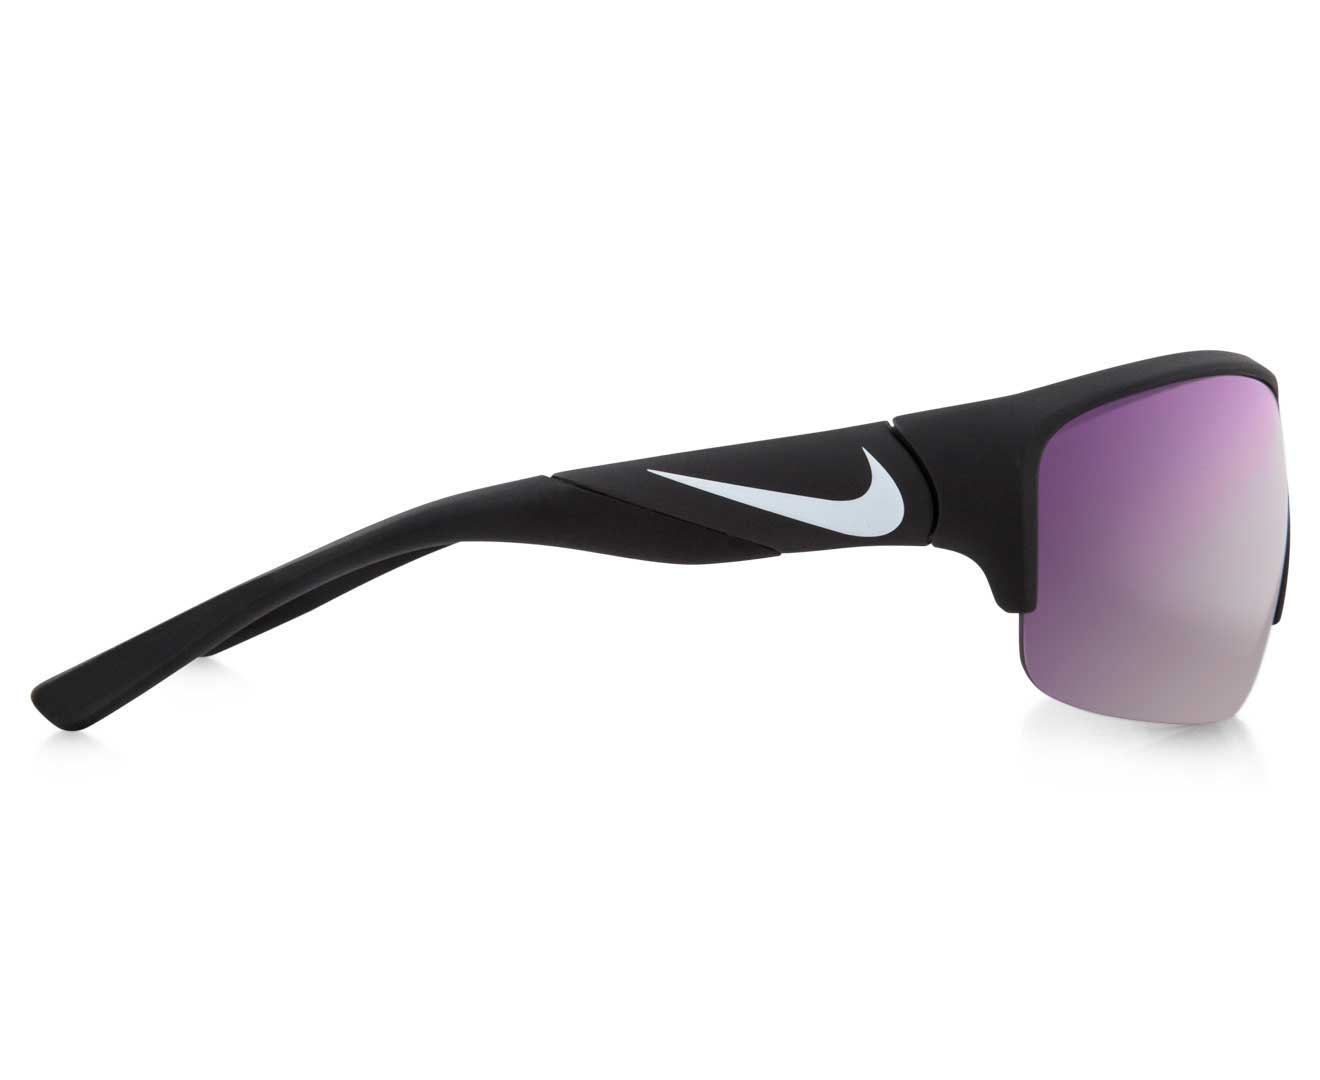 Golf X2 E Men's Sunglasses - Matte Black/Max Golf Tint | Catch.com.au